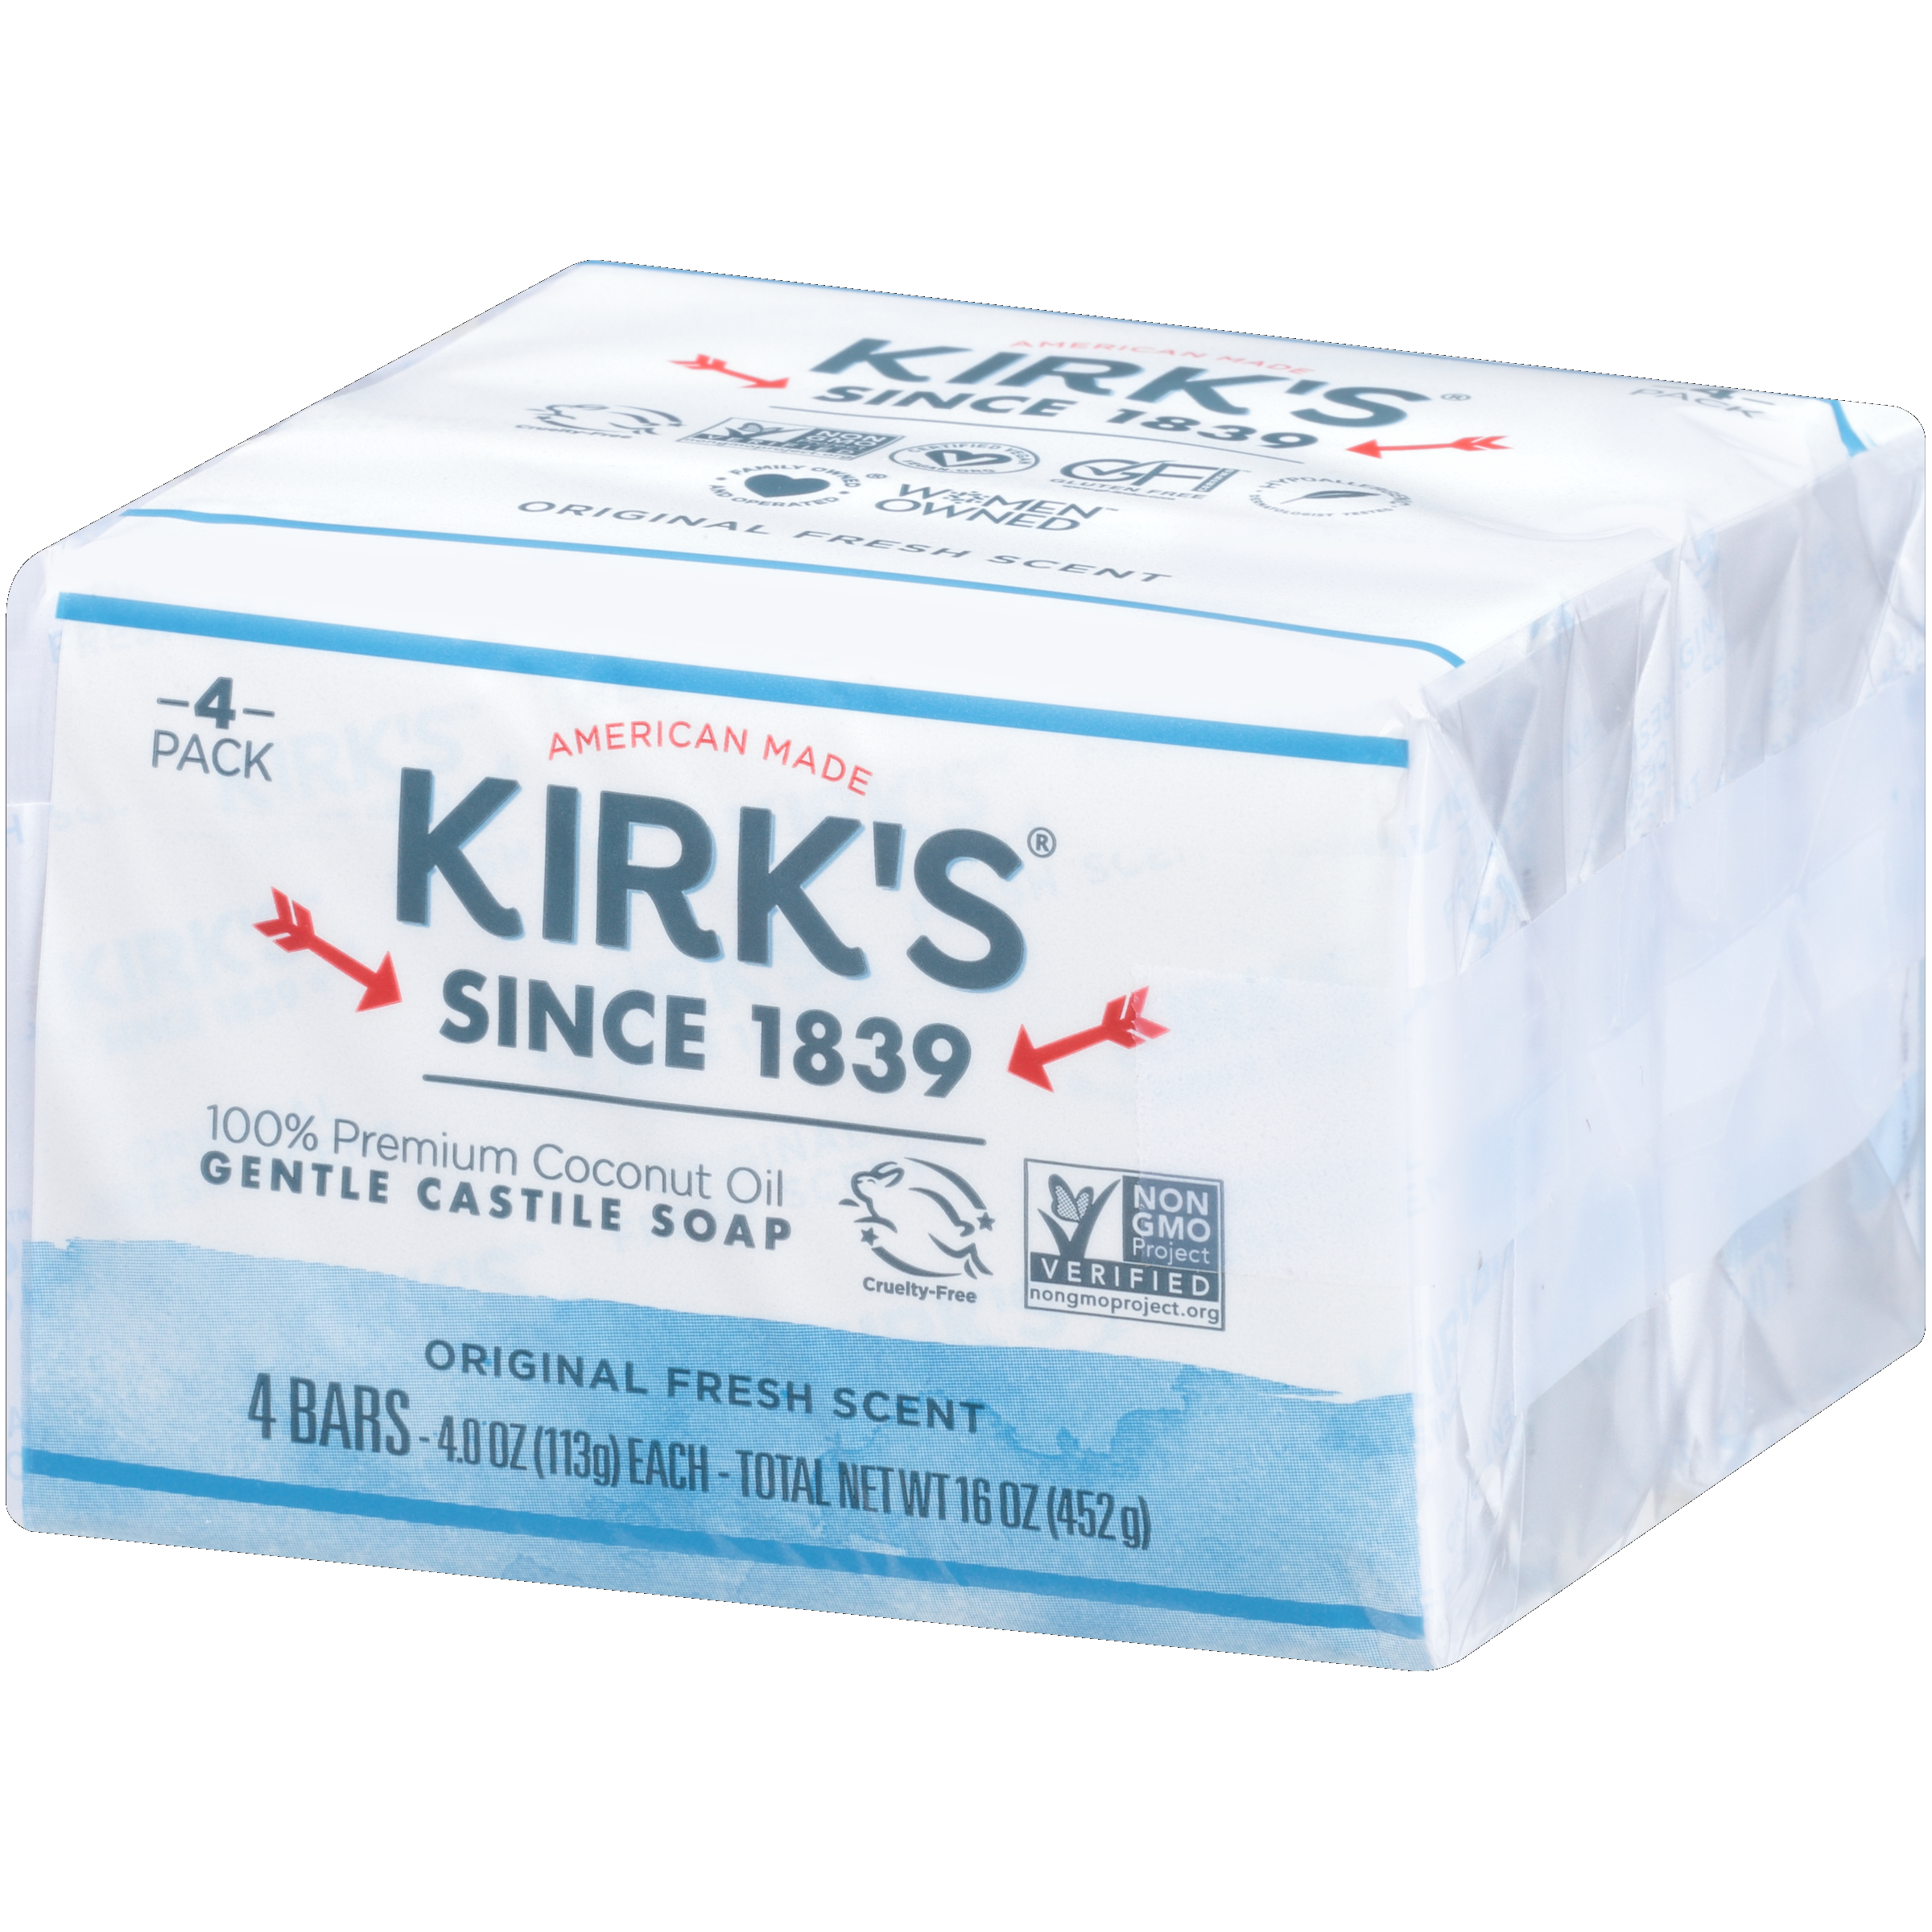 Kirk's Gentle Castile Soap, Original Fresh Scent, 3 Bars, 4 oz - image 4 of 4